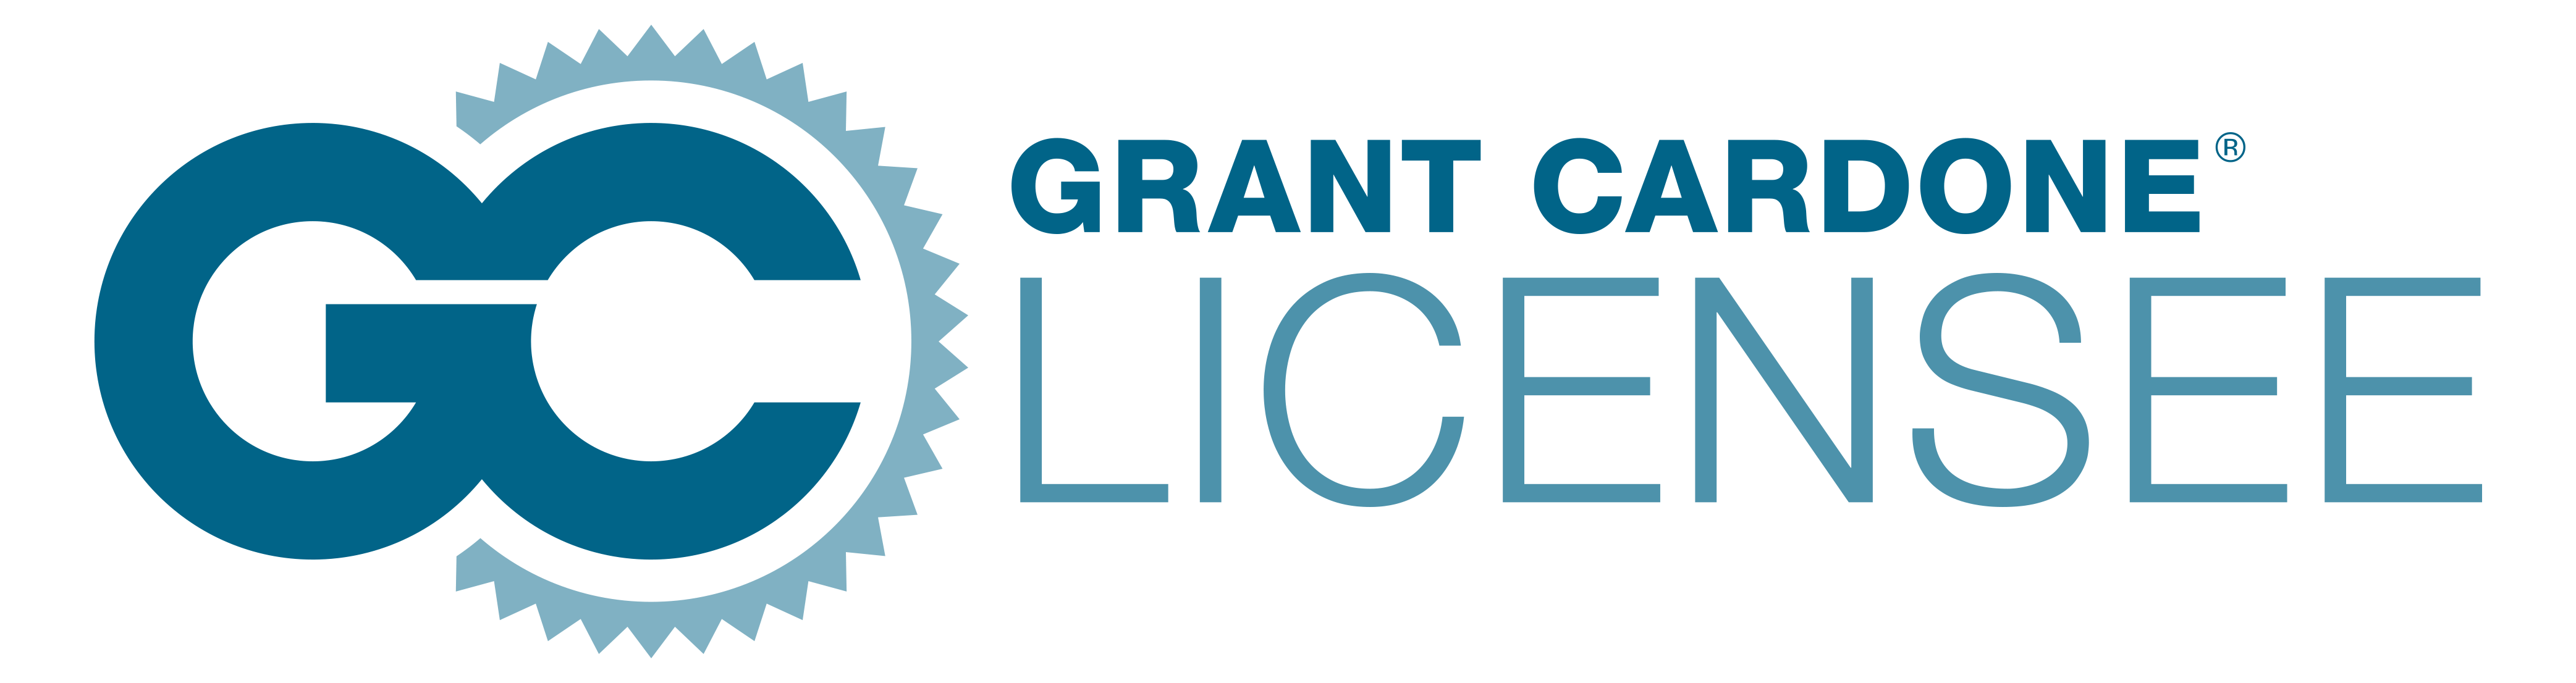 Grant Cardone Licensee Program - Horizontal LOGO-1